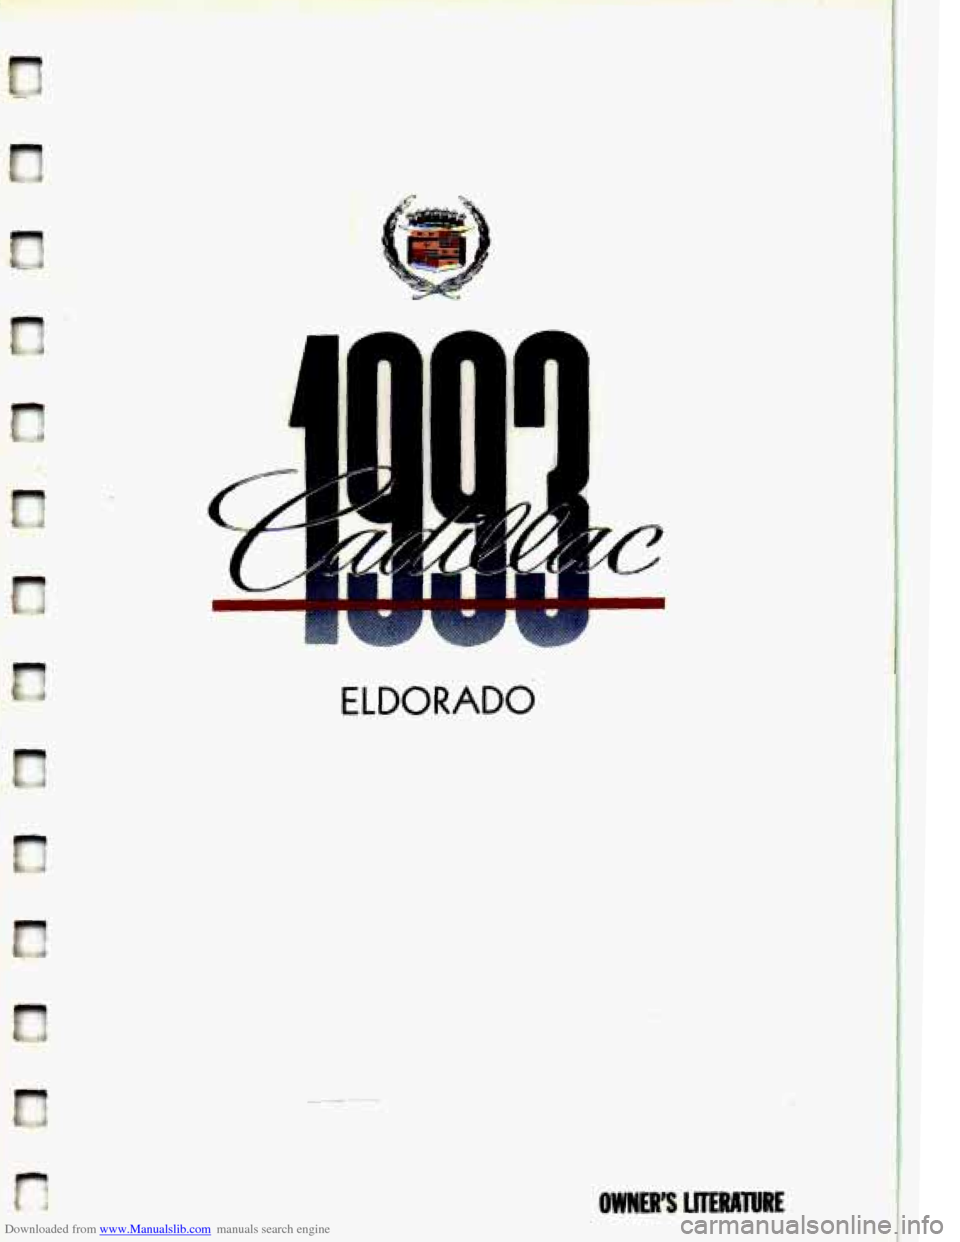 CADILLAC ELDORADO 1993 10.G Owners Manual Downloaded from www.Manualslib.com manuals search engine ELDORADO 
OWNERS LlIERATURE   